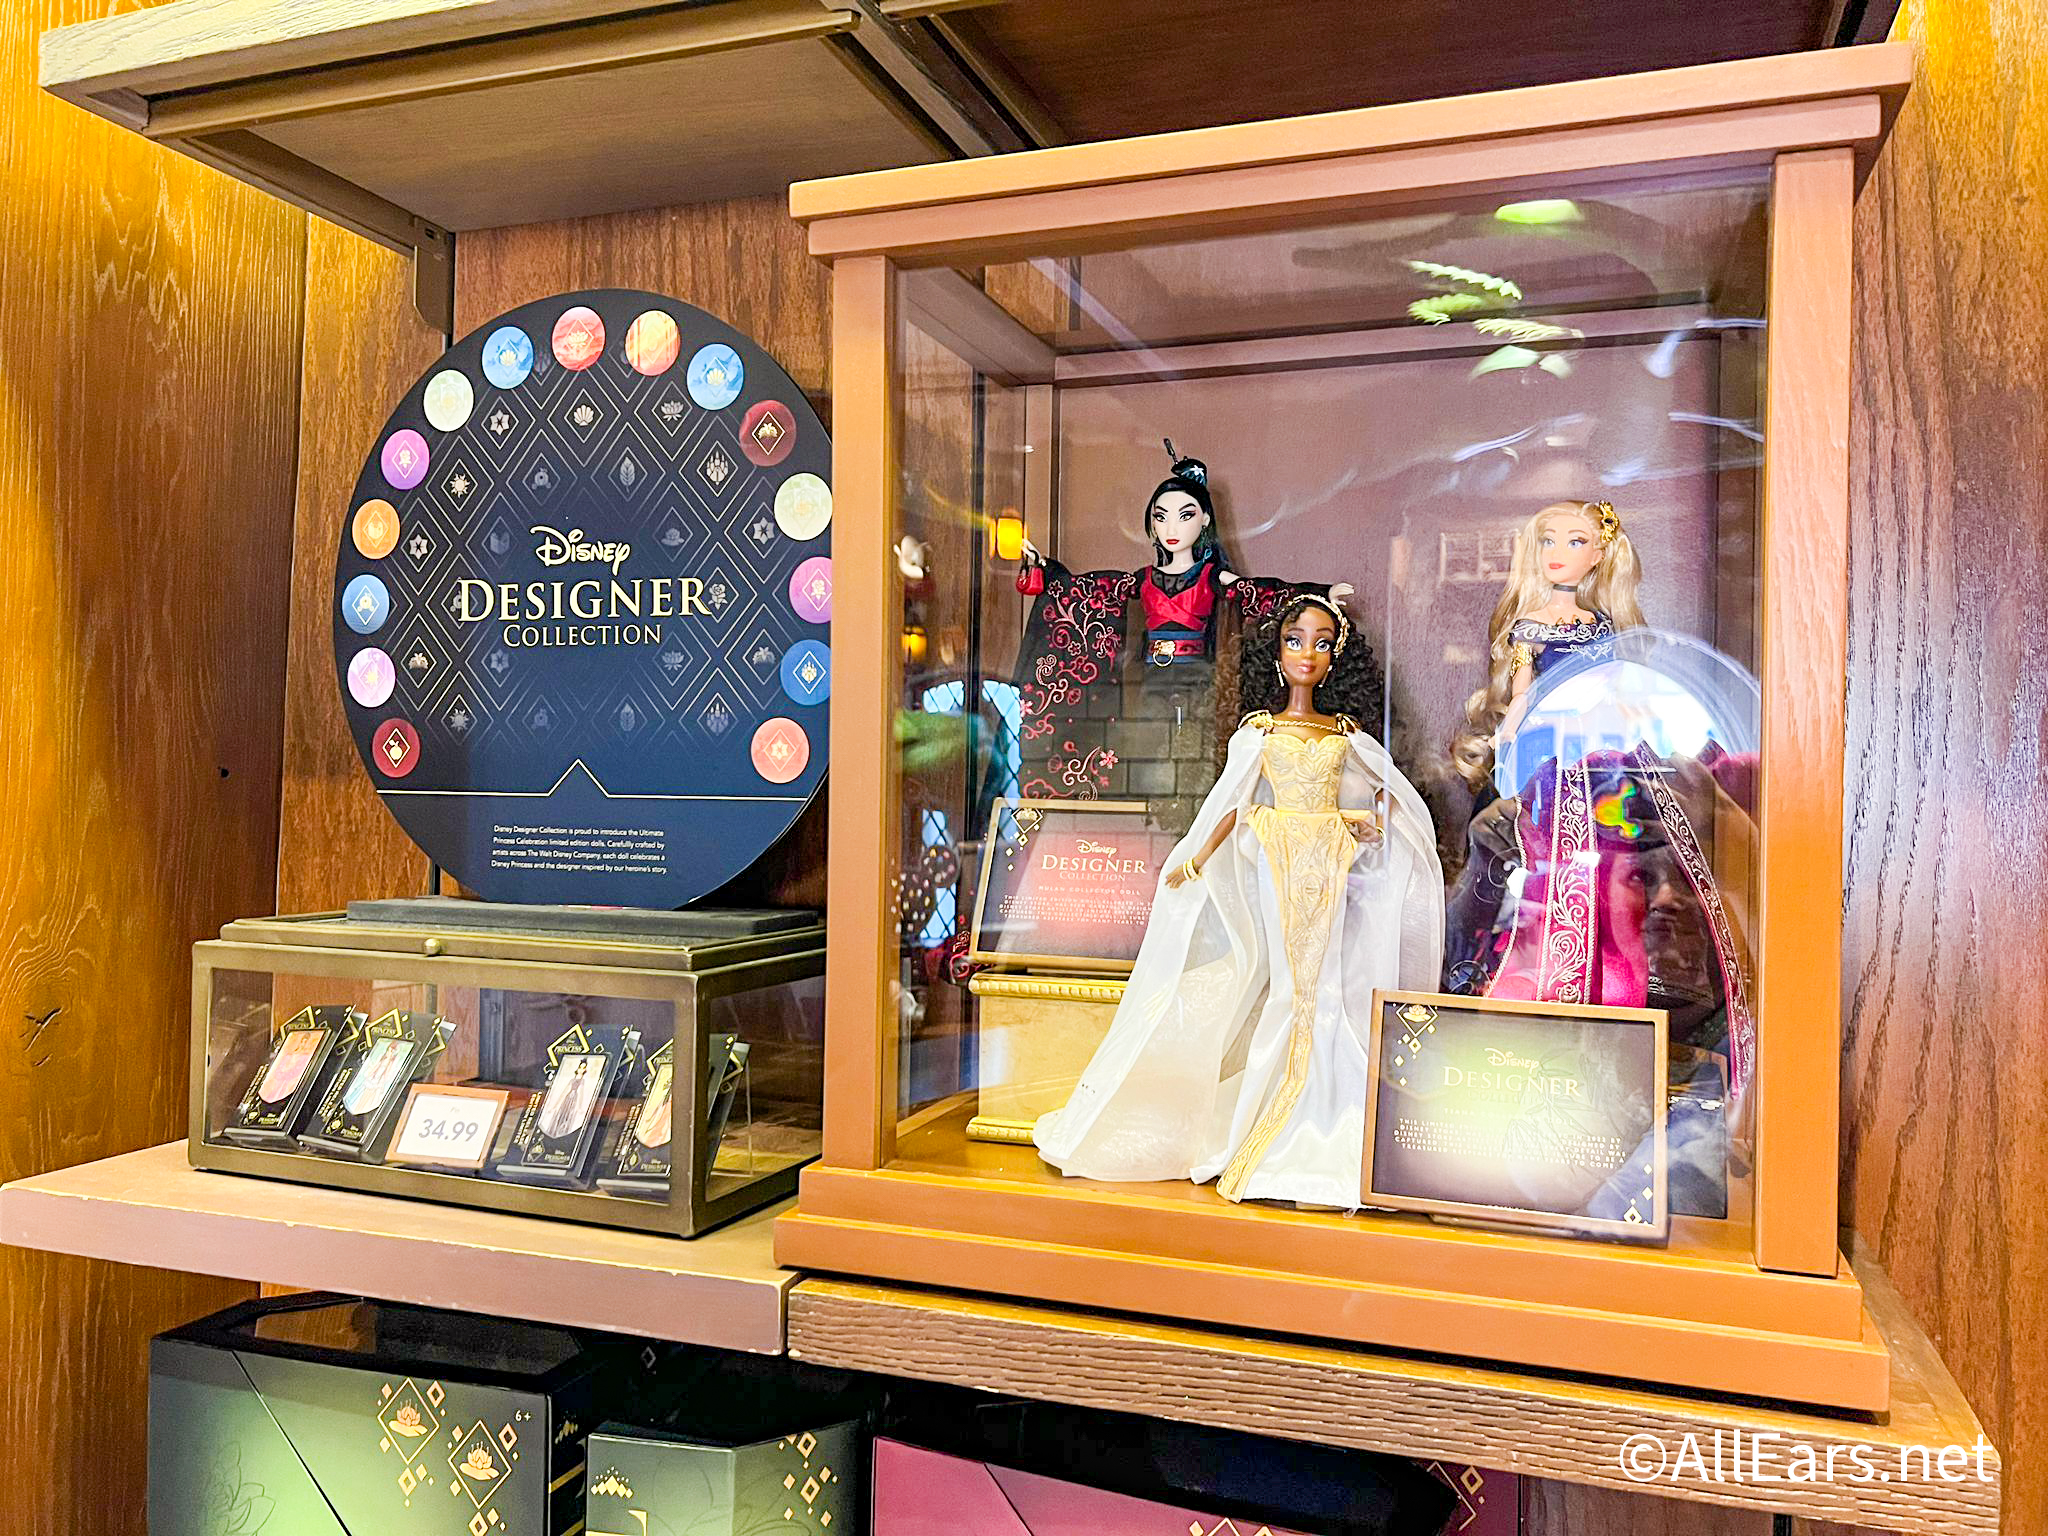 Disney Princess Designer Collection Aurora Doll Disney Store NEW